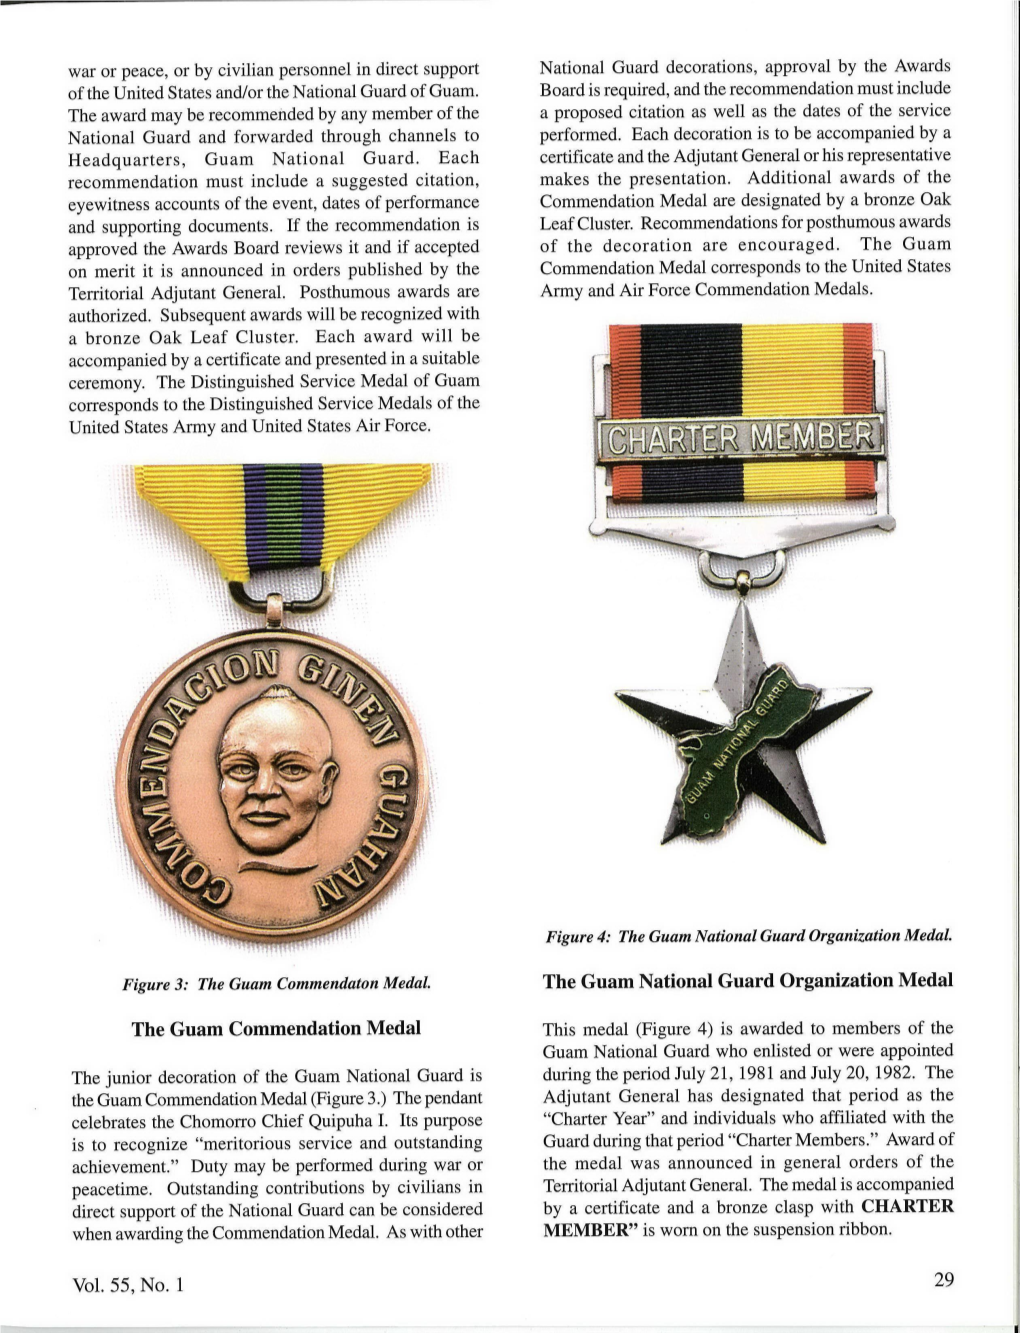 The Guam National Guard Organization Medal